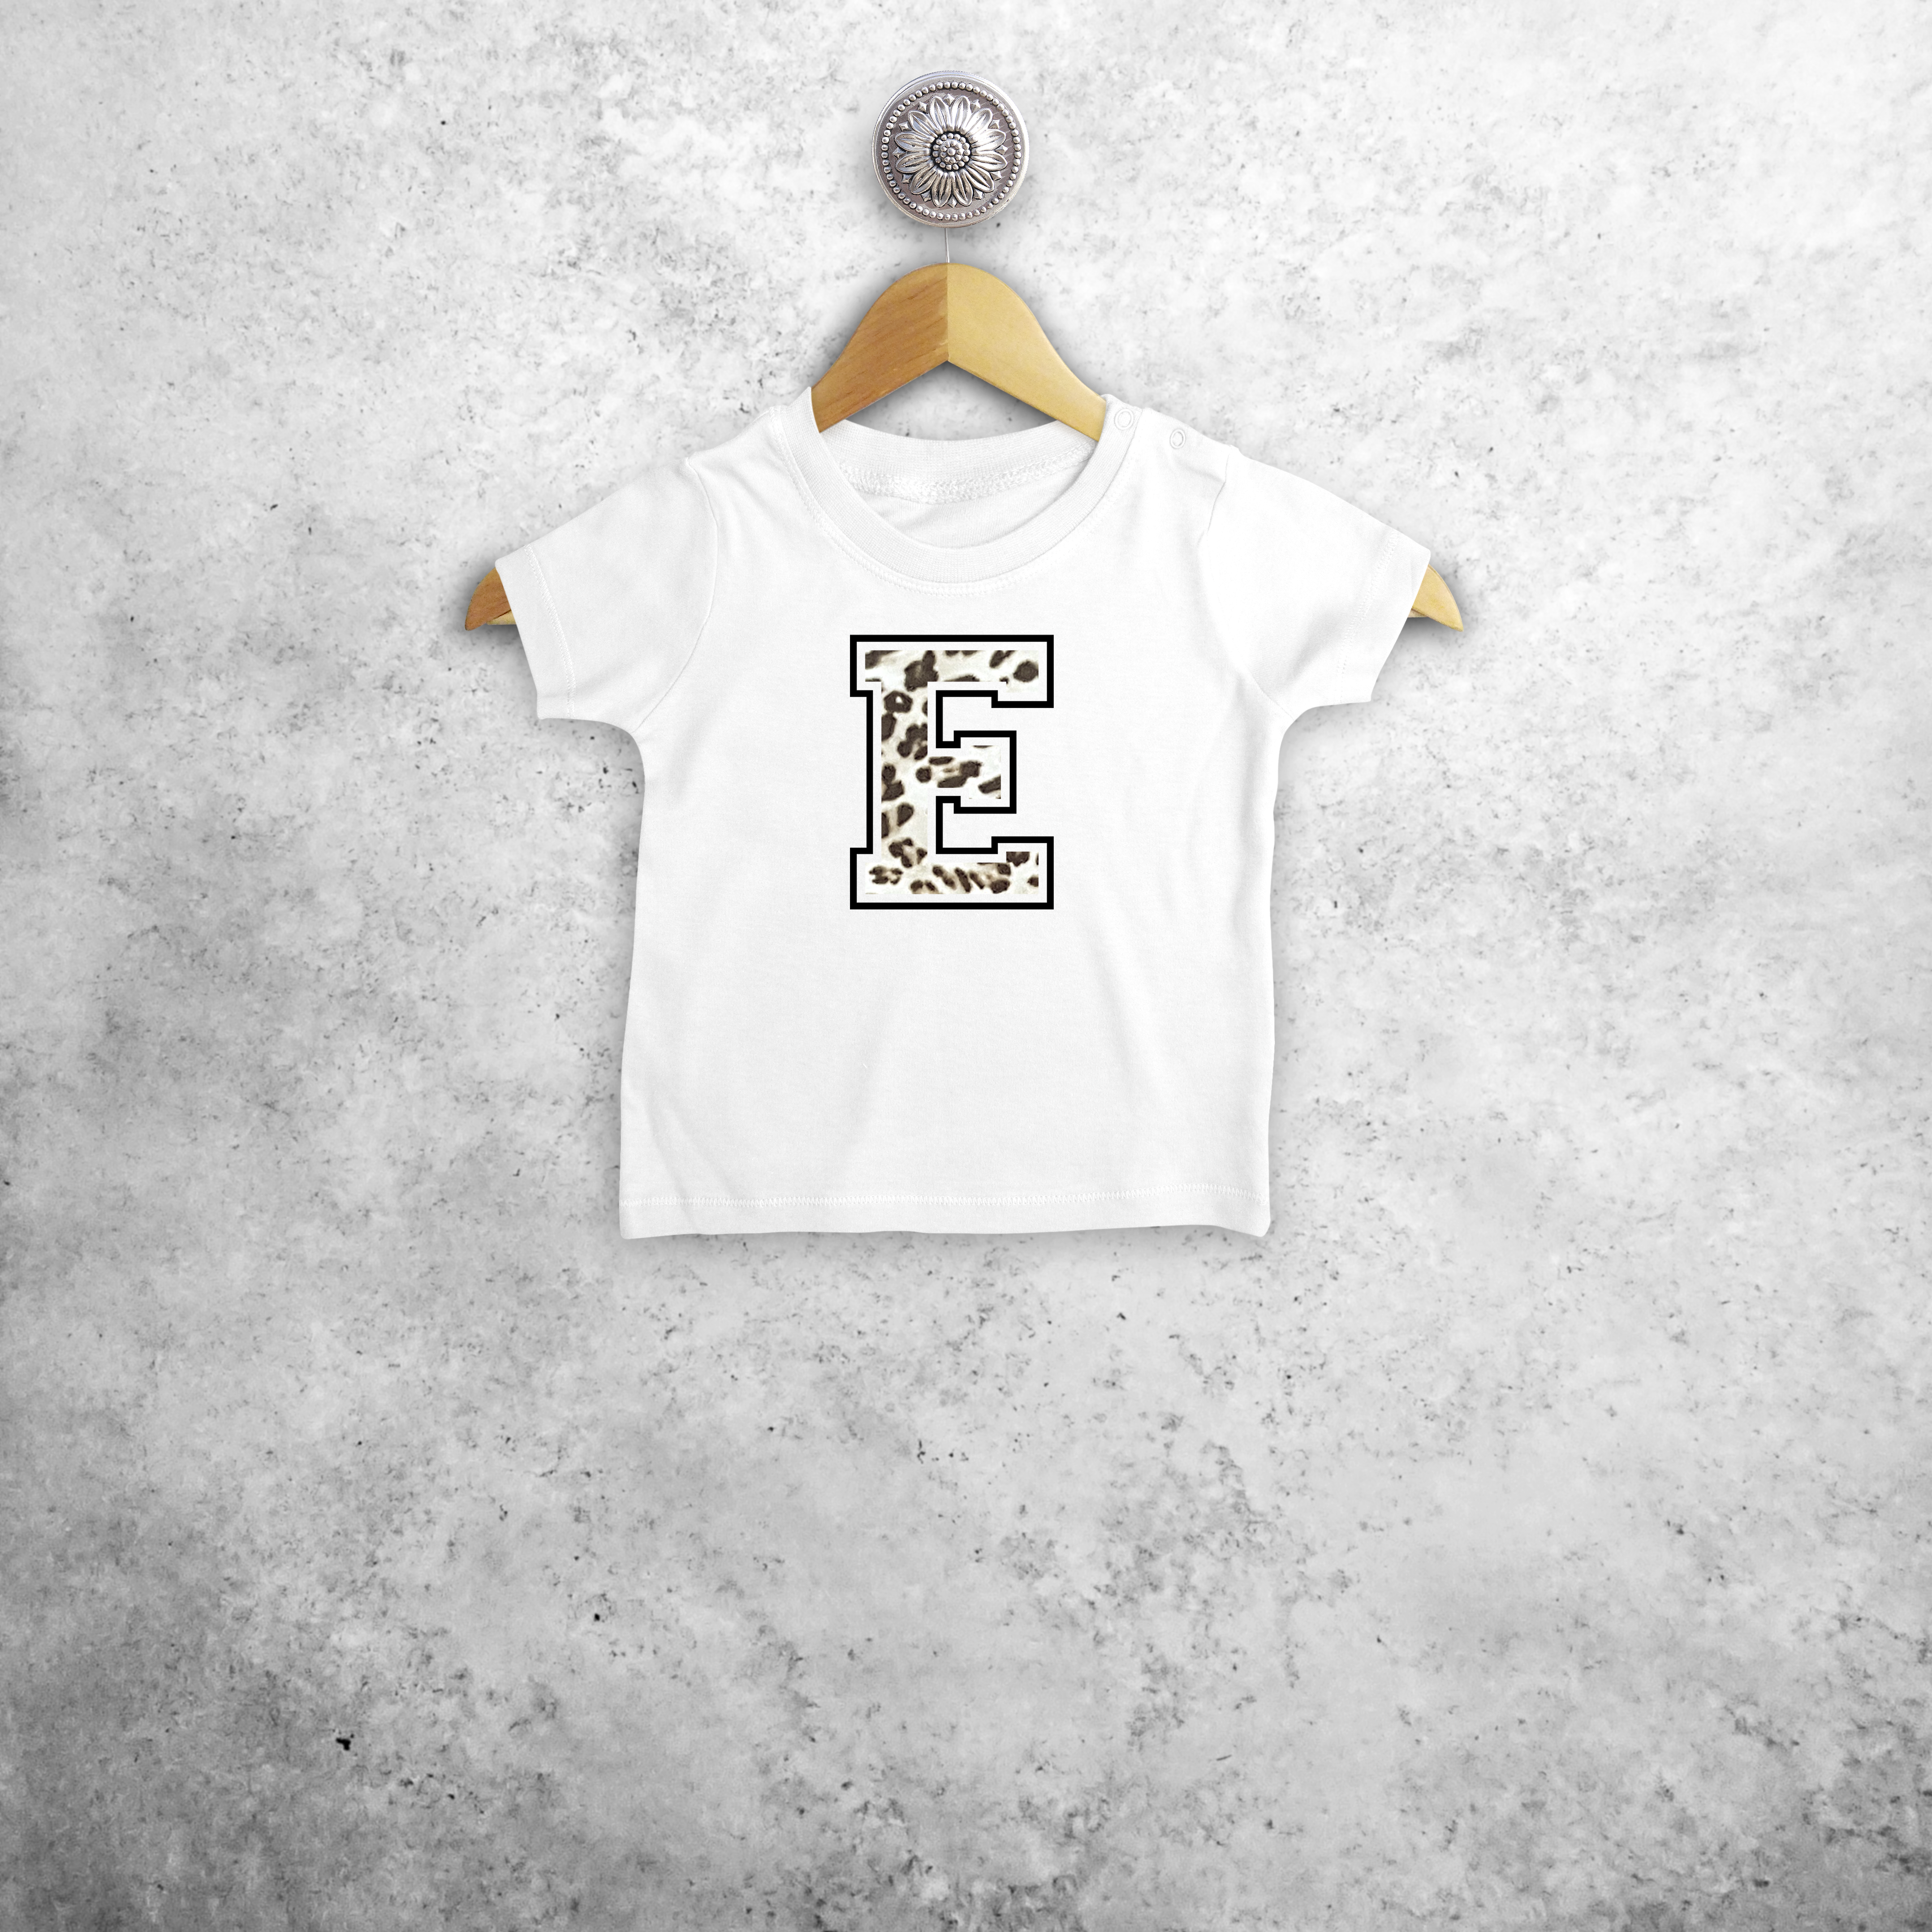 Leopard letter baby shortsleeve shirt